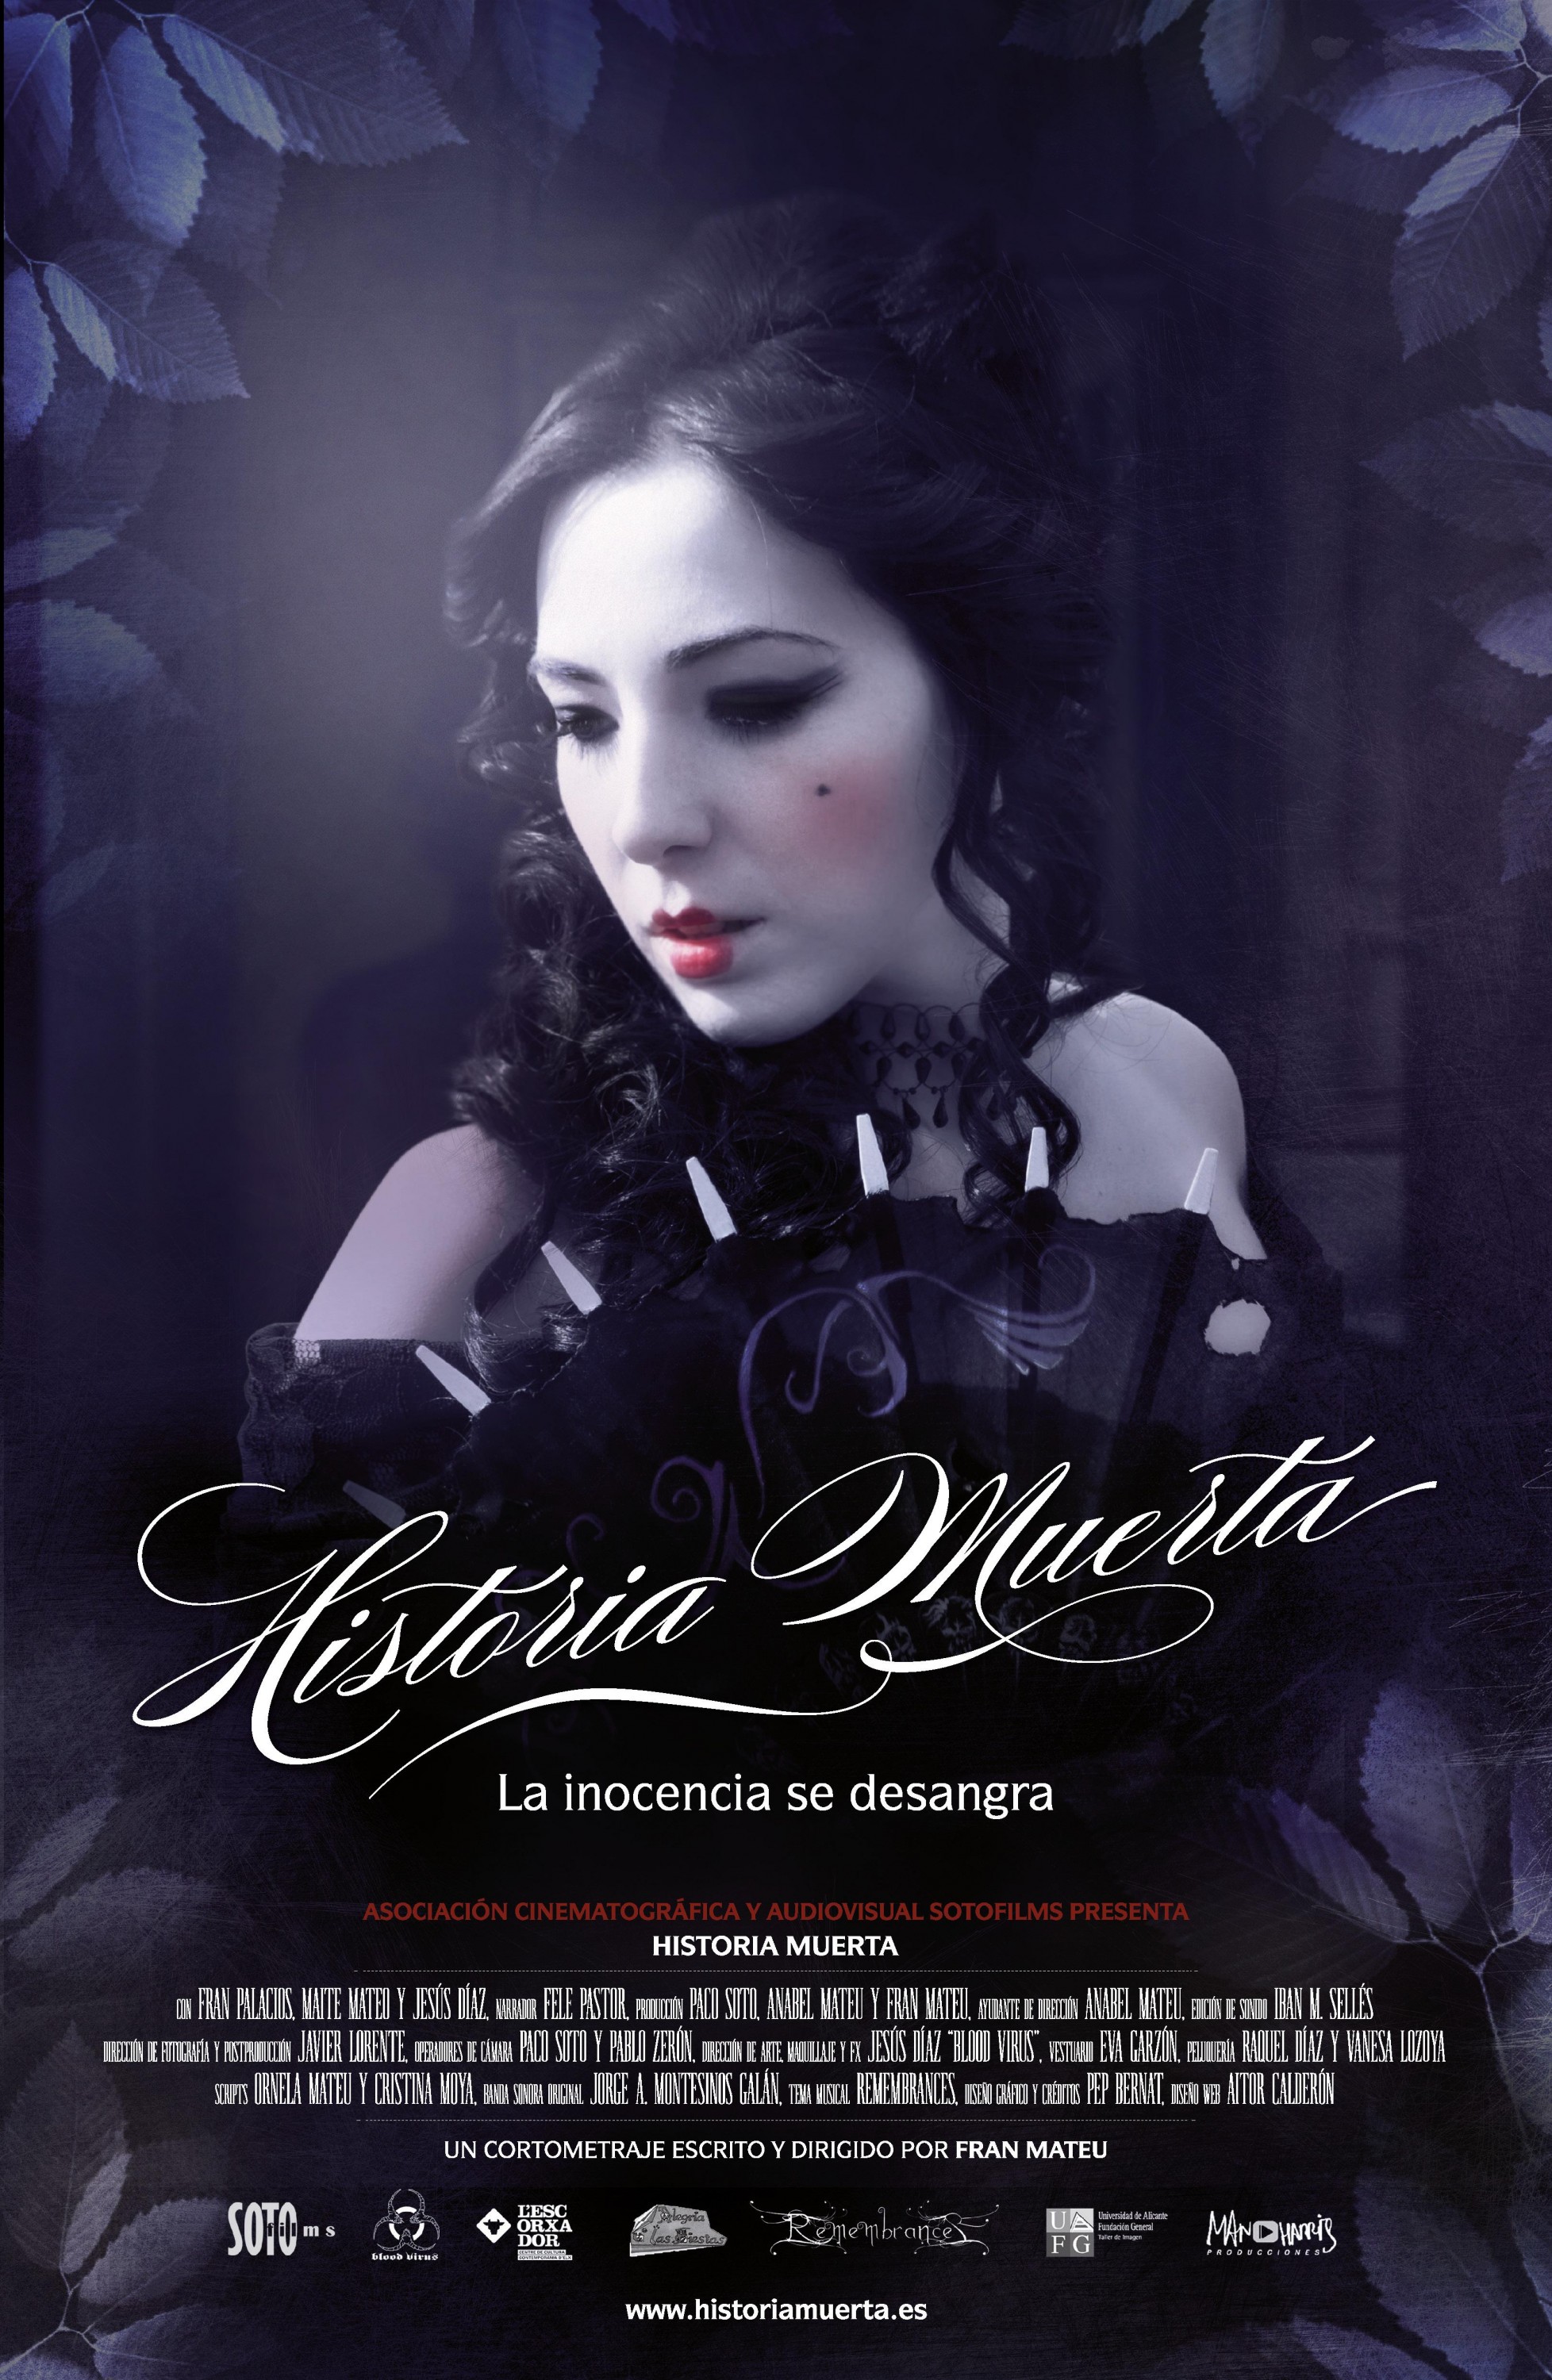 Mega Sized Movie Poster Image for Historia Muerta